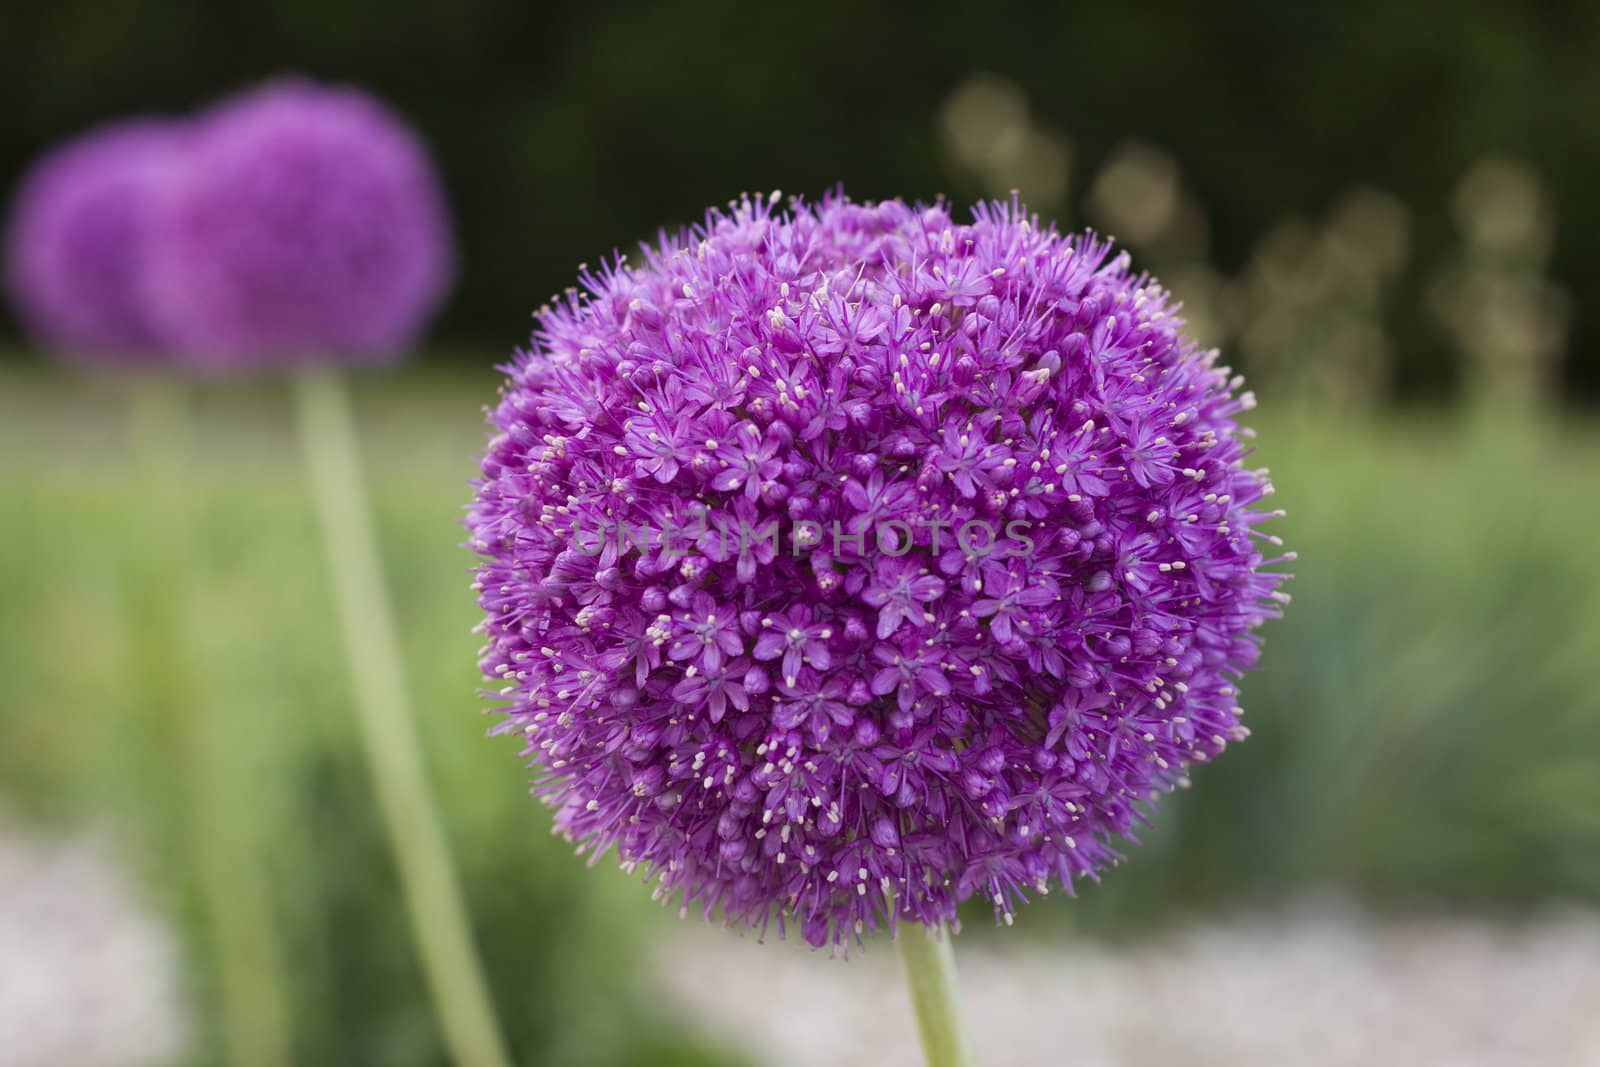 close-up of a beautiful purple garlic flower